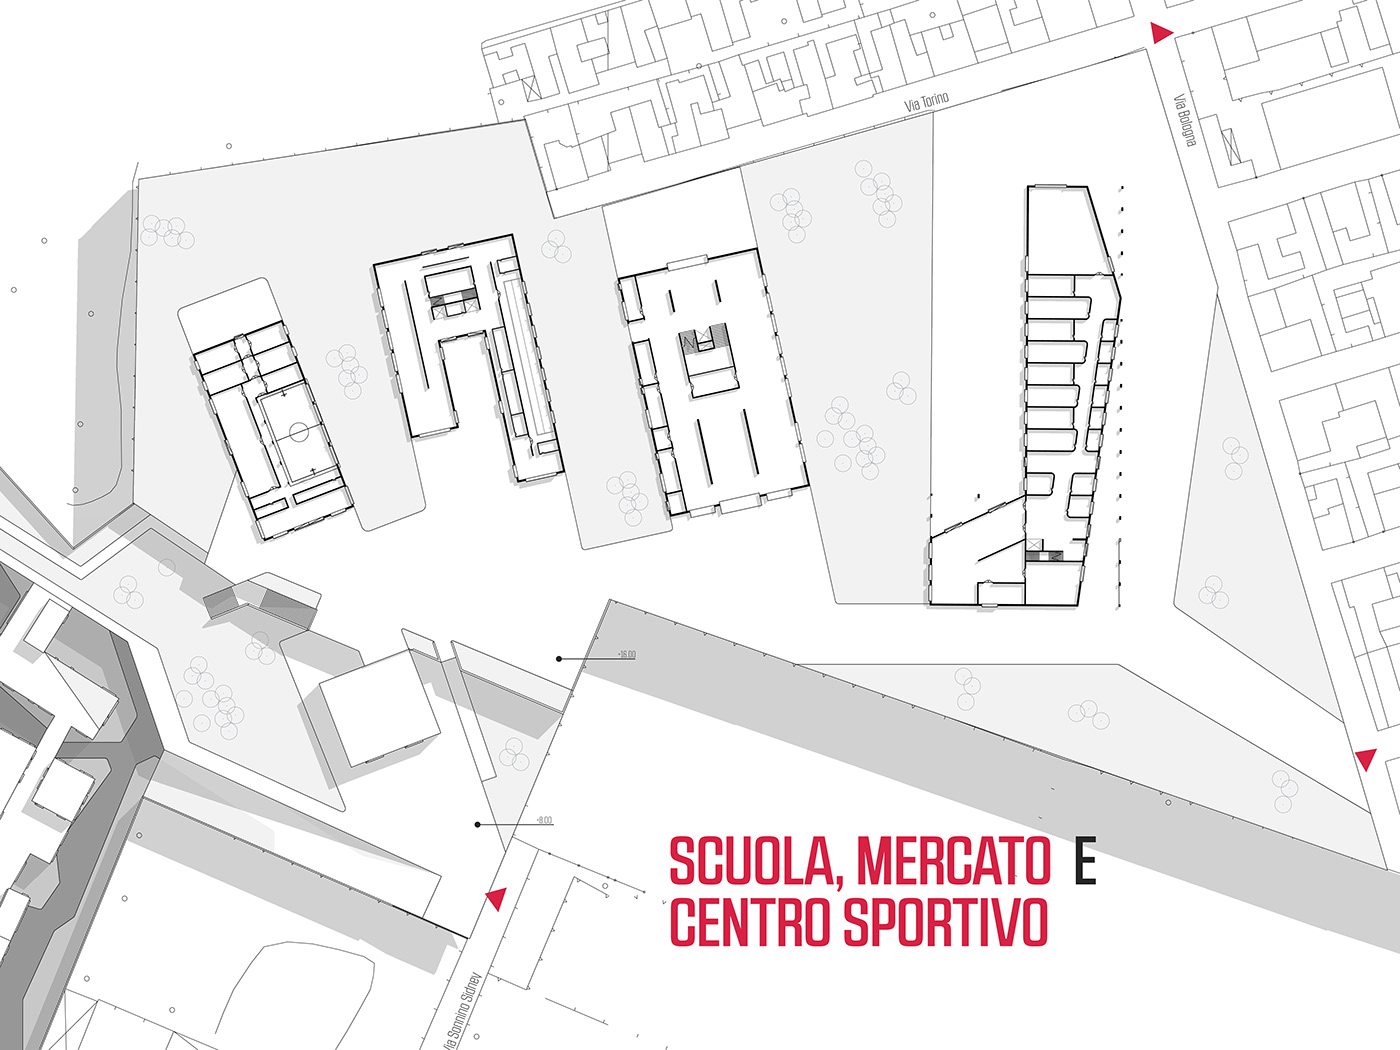 architect reuse mall shopping center sicily Italy University Work  Like graphics